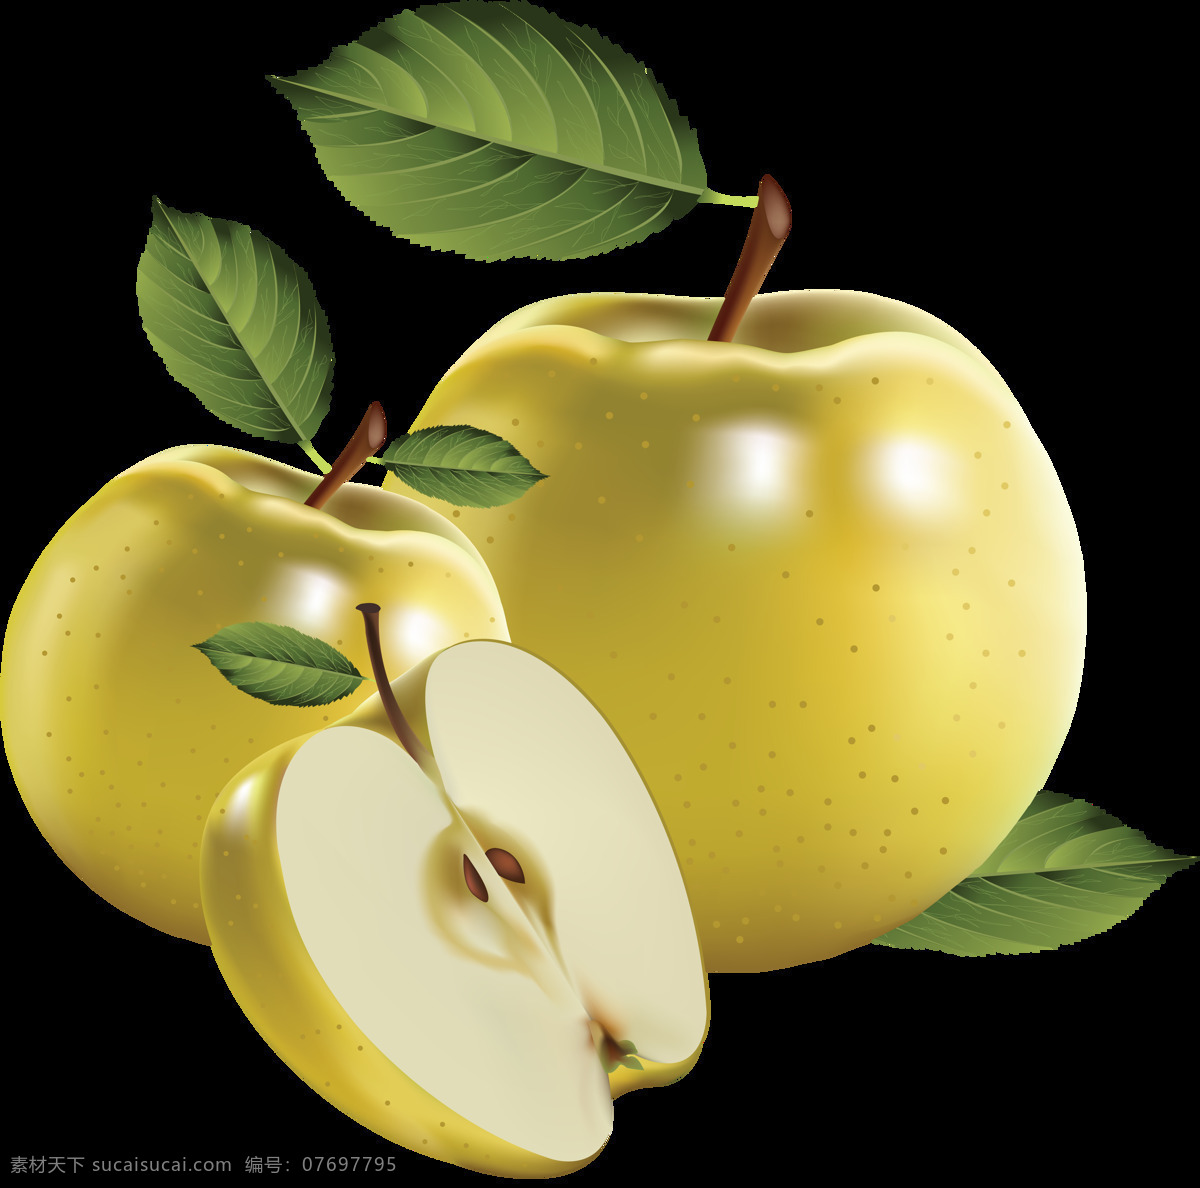 apple 创意水果 动漫动画 高清 黄苹果 美味 苹果 苹果设计素材 苹果模板下载 水果静物 水果 营养 新鲜 新鲜水果 特写 生物世界 psd源文件